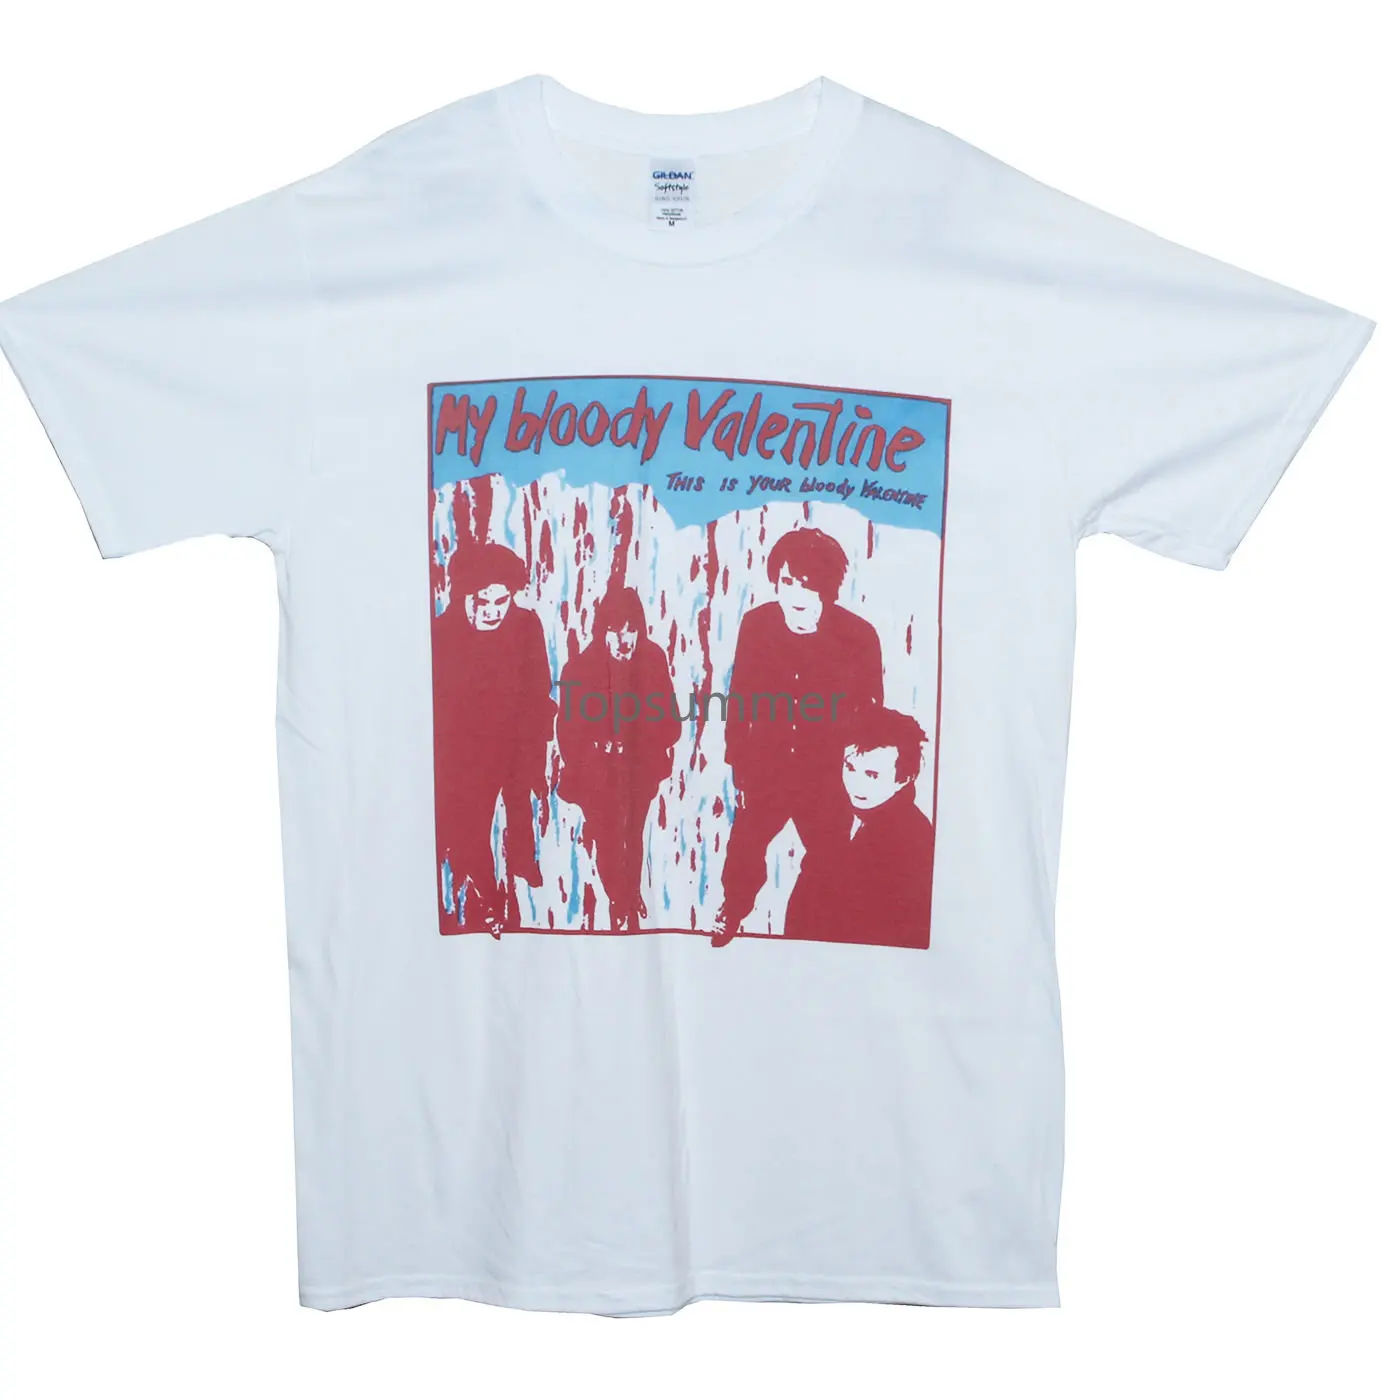 

My Bloody Valentine Verve Dinosaur Jr Indie Rock Band Graphic Music Teemen Tee Shirt Tops Short Sleeve Cotton Fitness T-Shirt